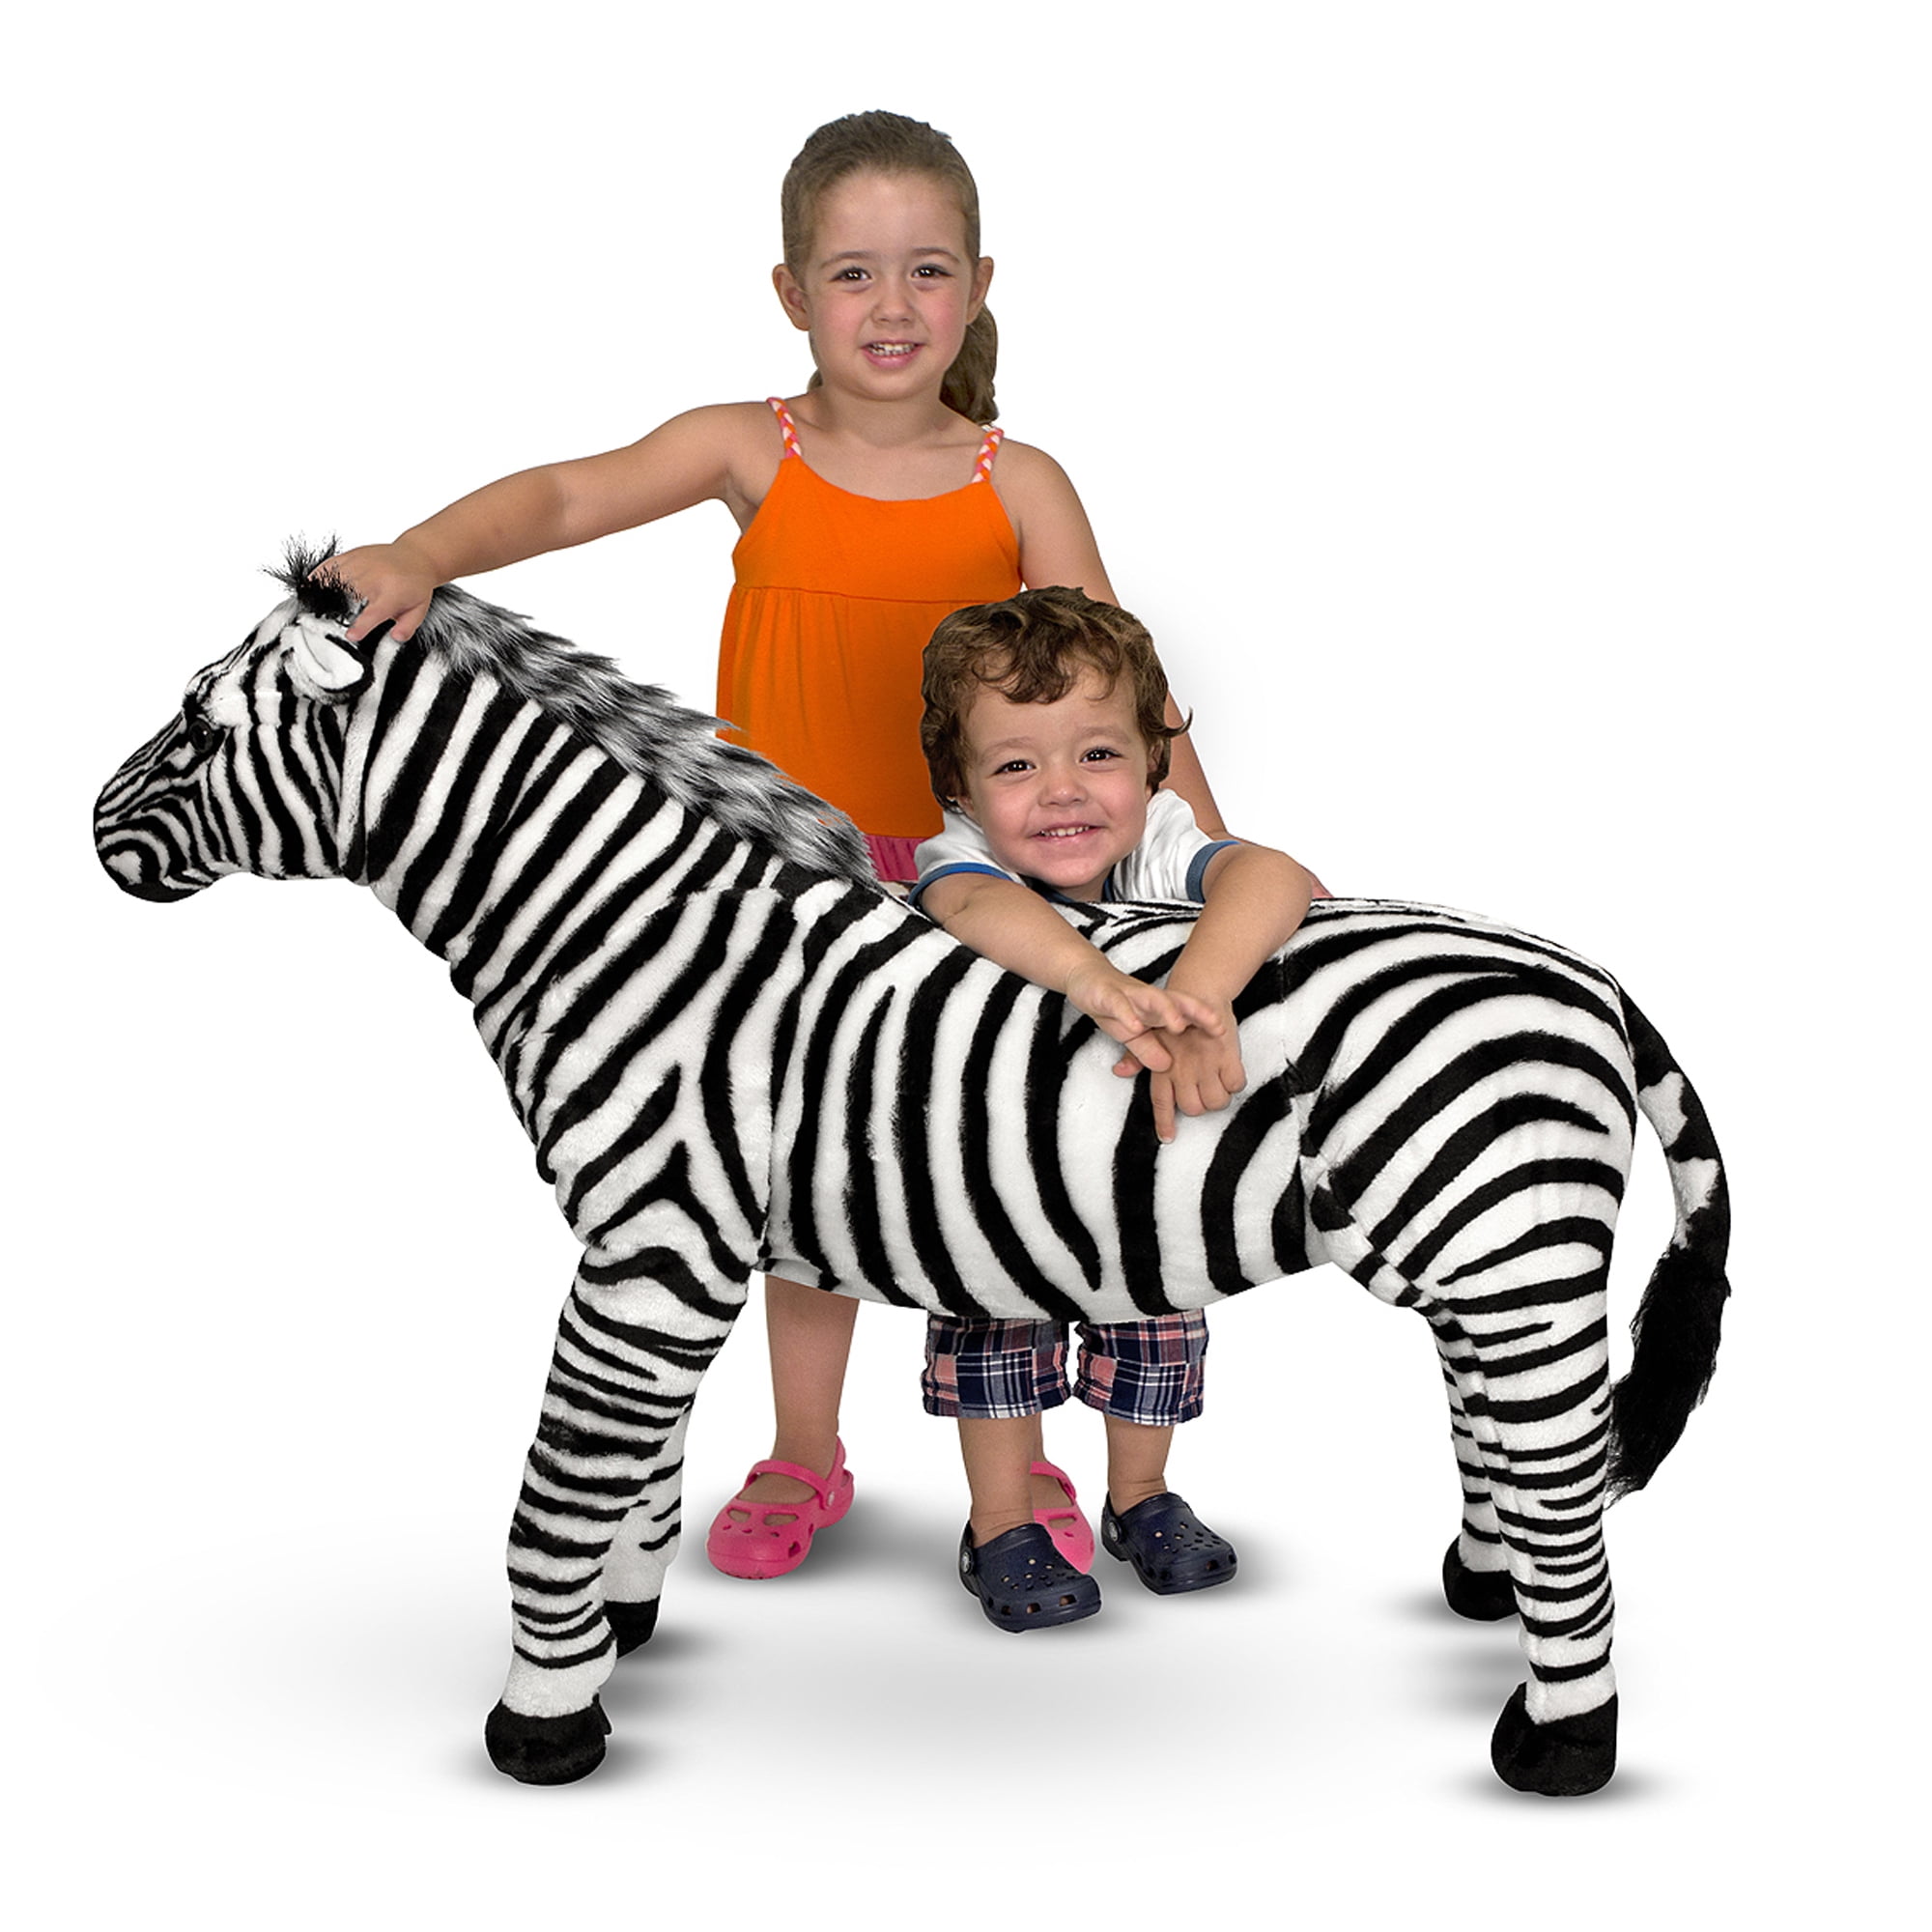 Details about   Giant Hung Lifelike Zebra Simulation Soft Doll Big Stuffed Animal Plush Toy Gift 